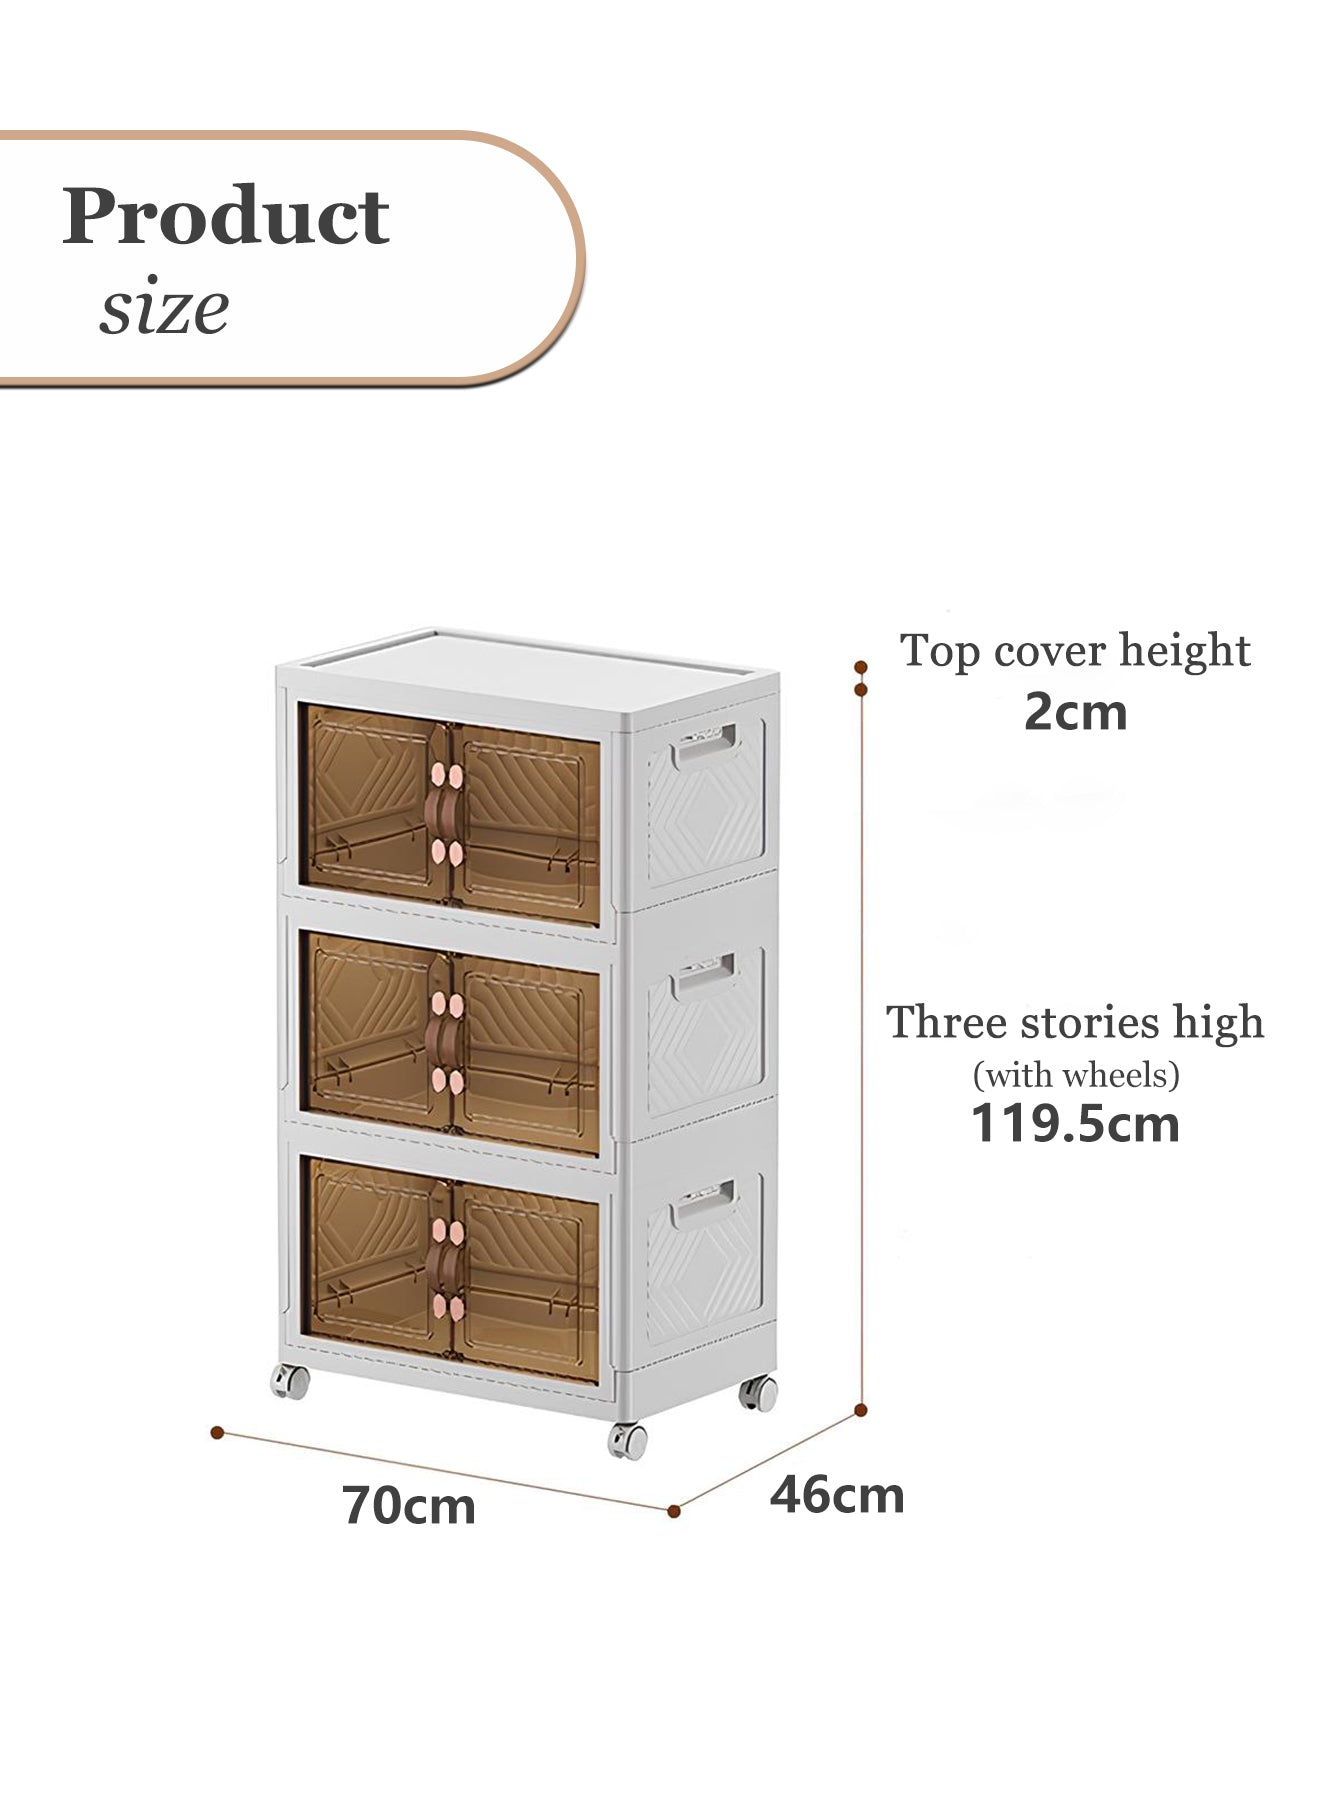 【KSA STOCK】Foldable plastic storage box with wheels and doors, three shelves, large size 119*70 cm NK008